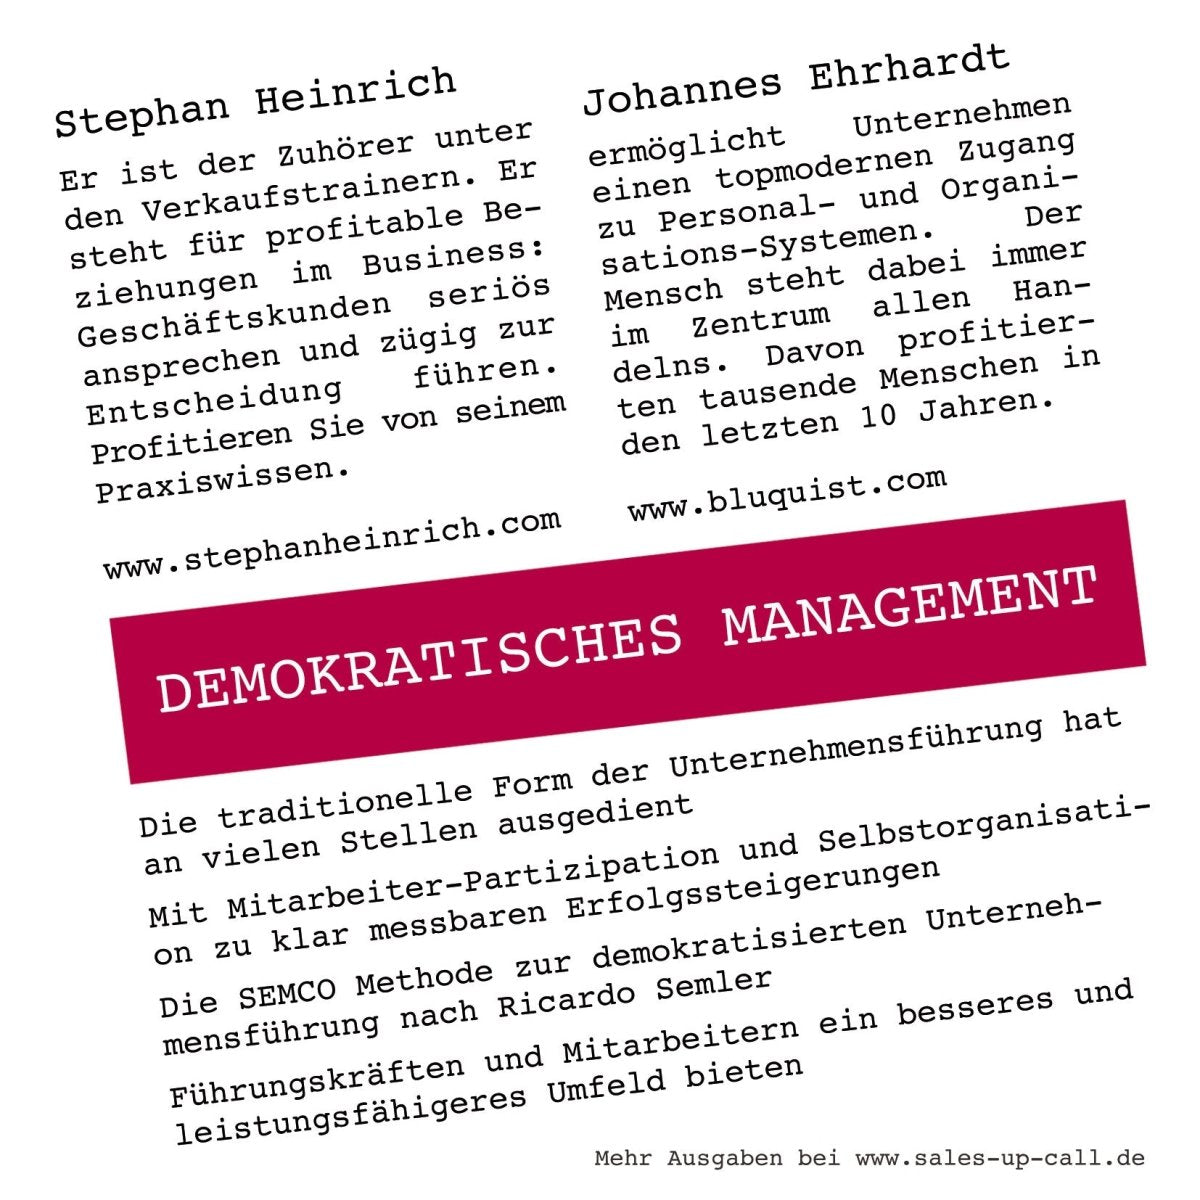 Demokratisches Management - Sales-up-Call - Stephan Heinrich